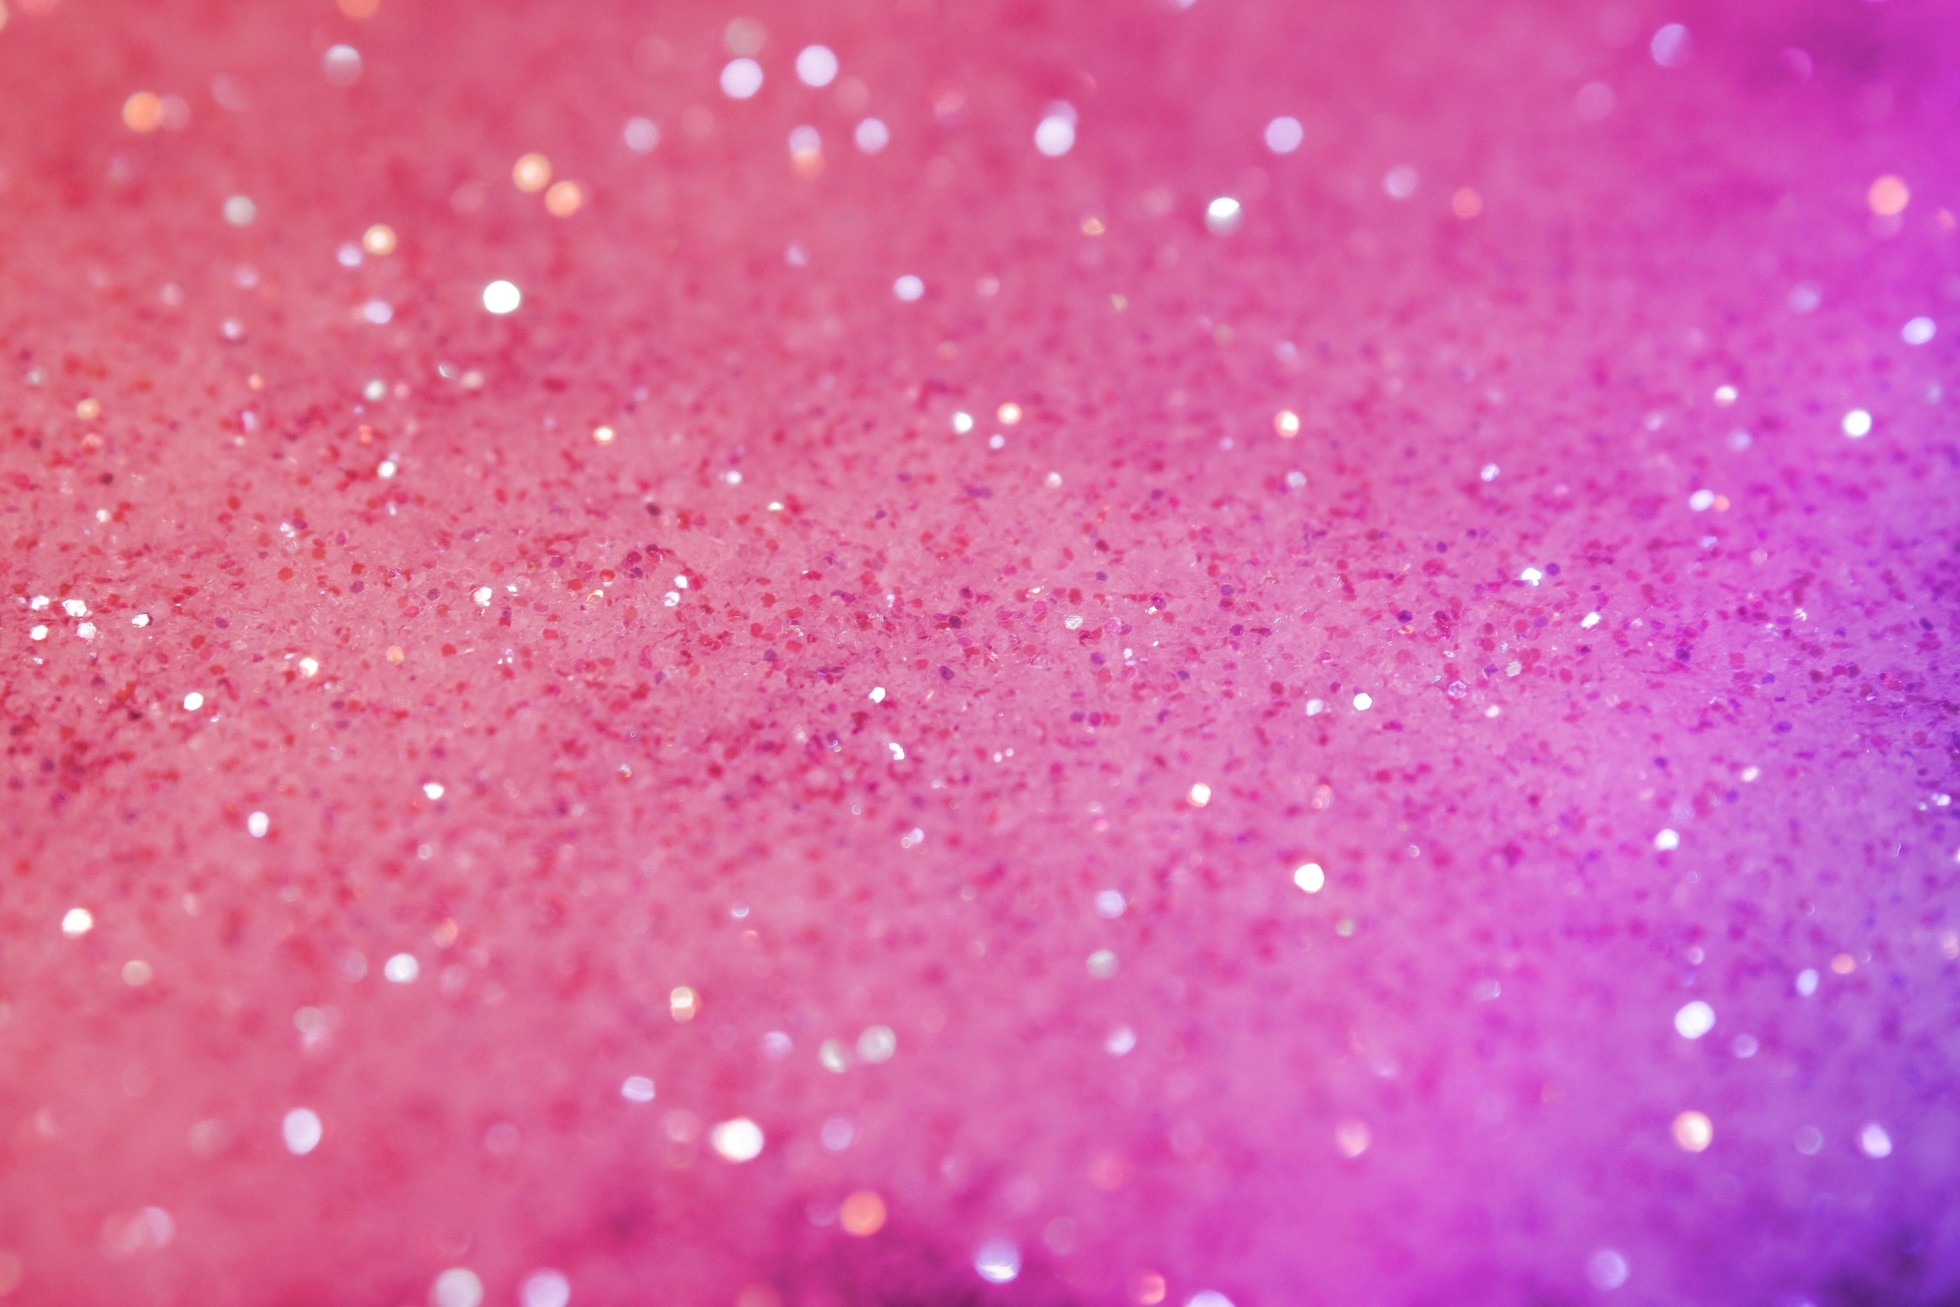 1960x1307 Explore and share Pink Glitter Desktop Wallpaper on WallpaperSafari